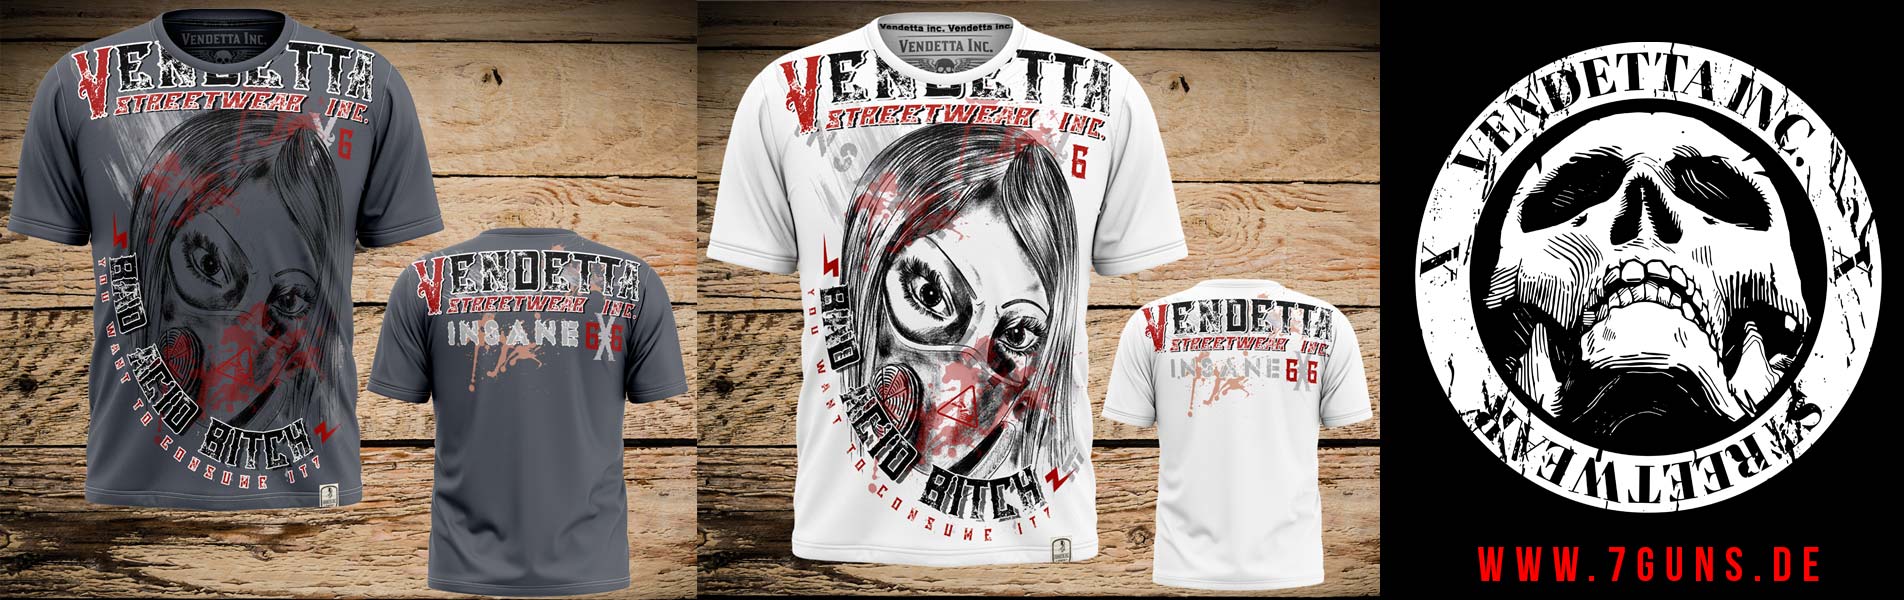 Vendetta Streetwear Insane Shirt